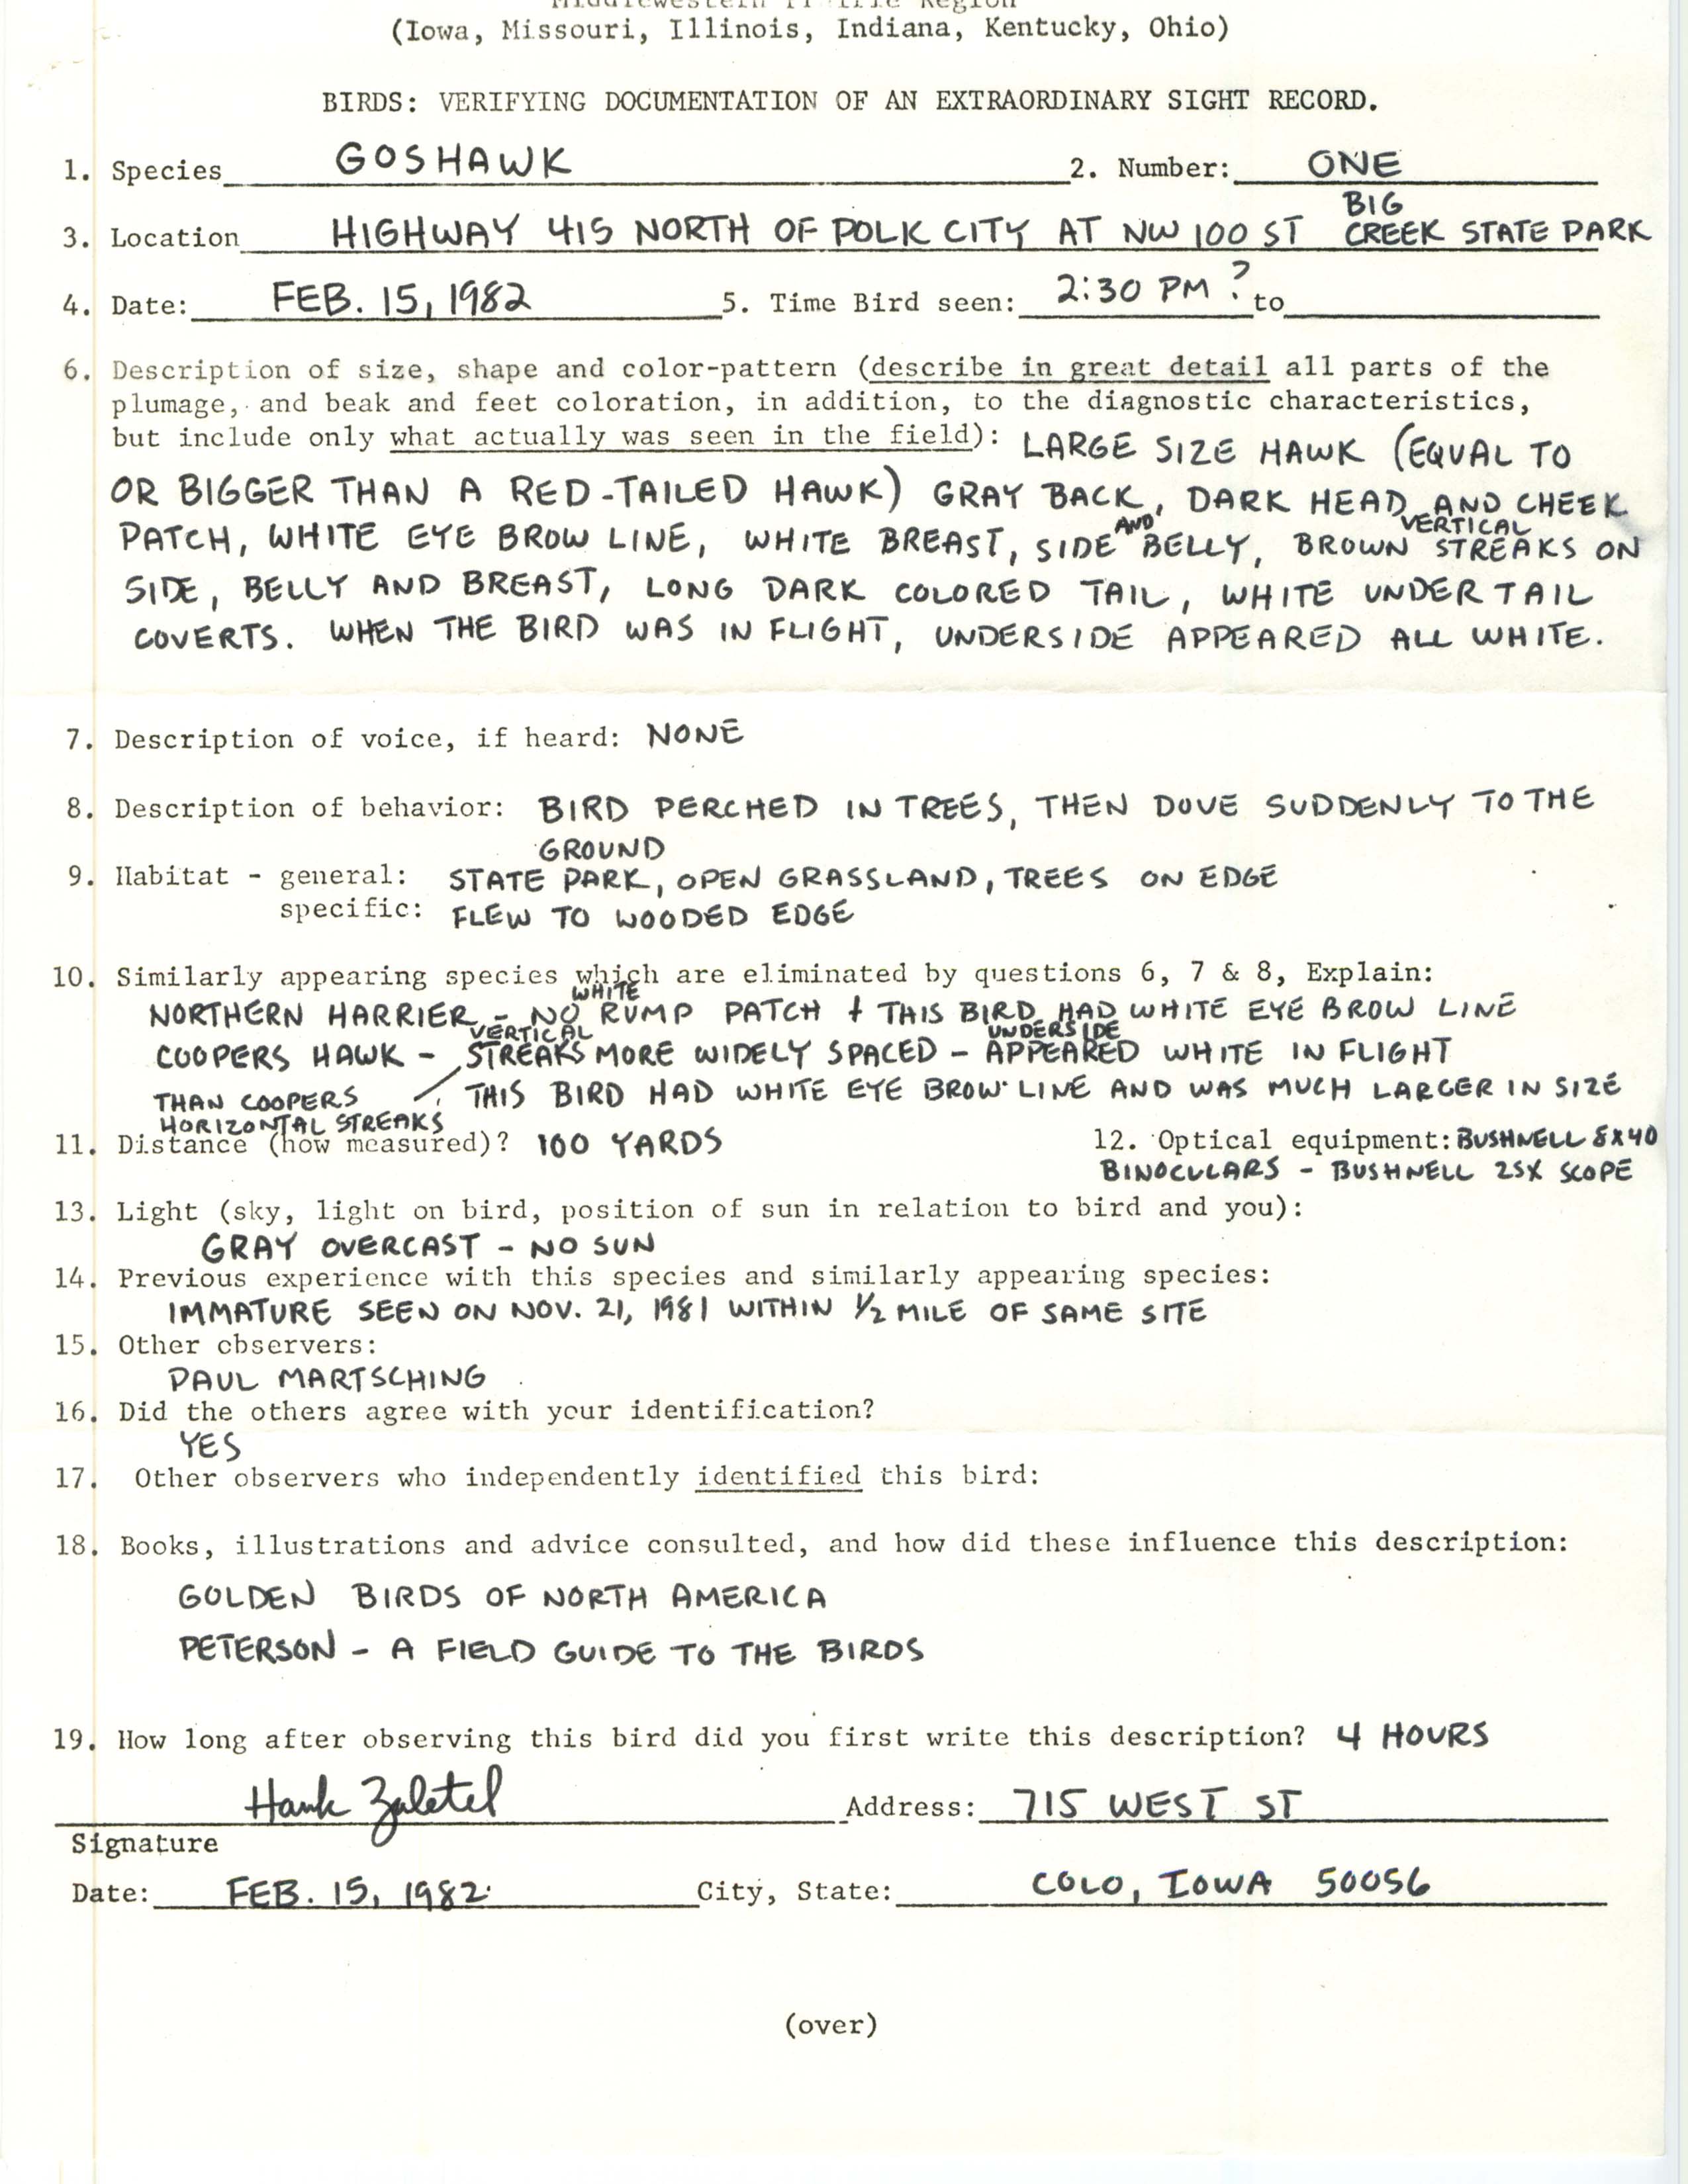 Rare bird documentation form for Northern Goshawk at Big Creek State Park, 1982